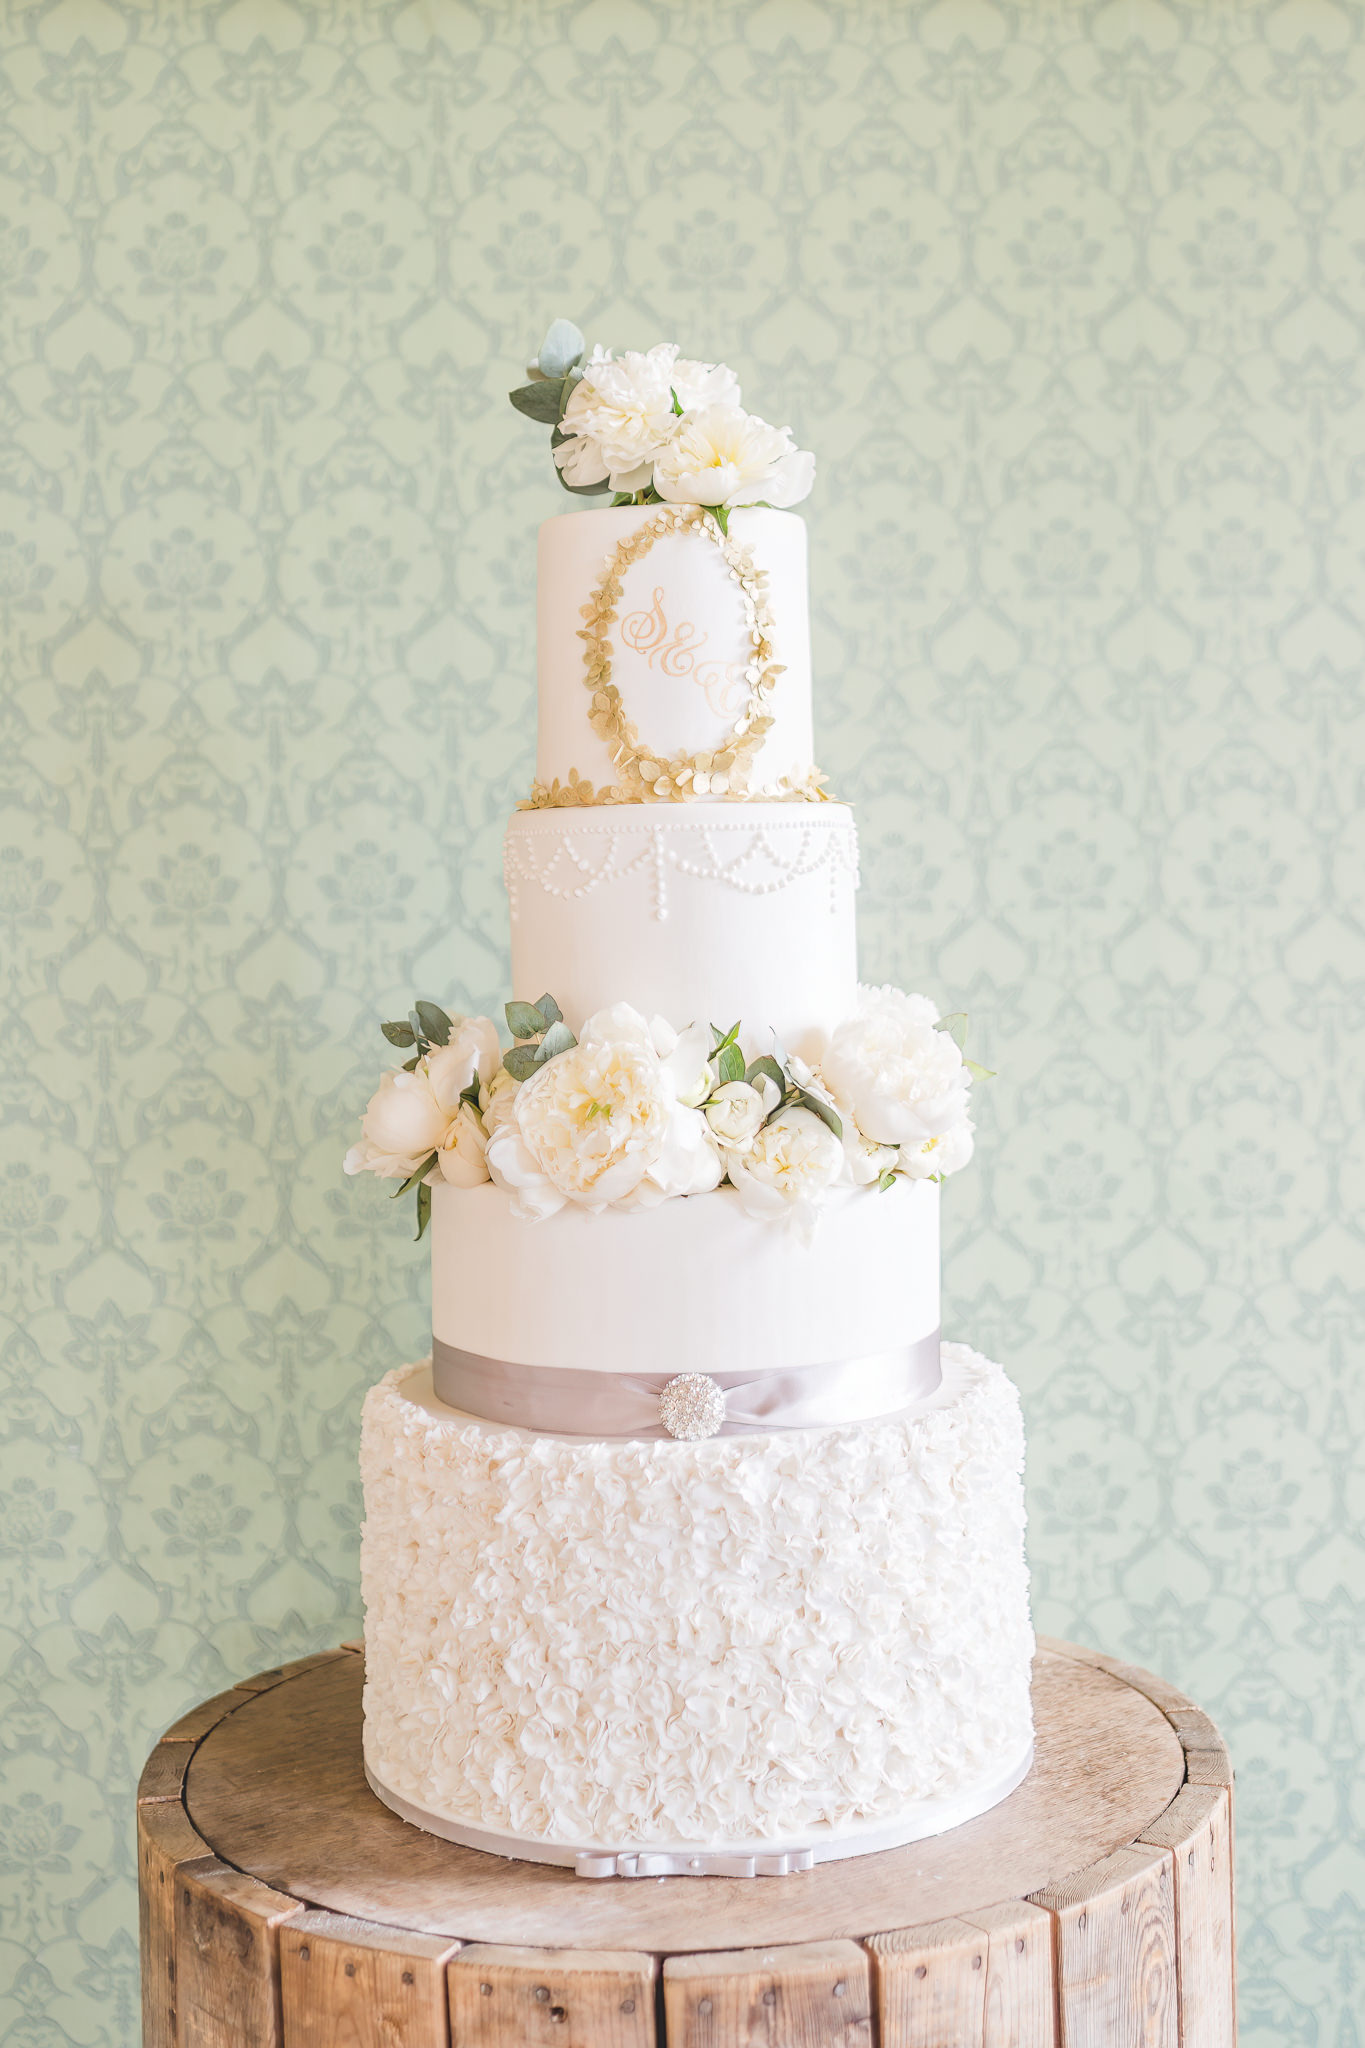 Tower Hill barns wedding cake 